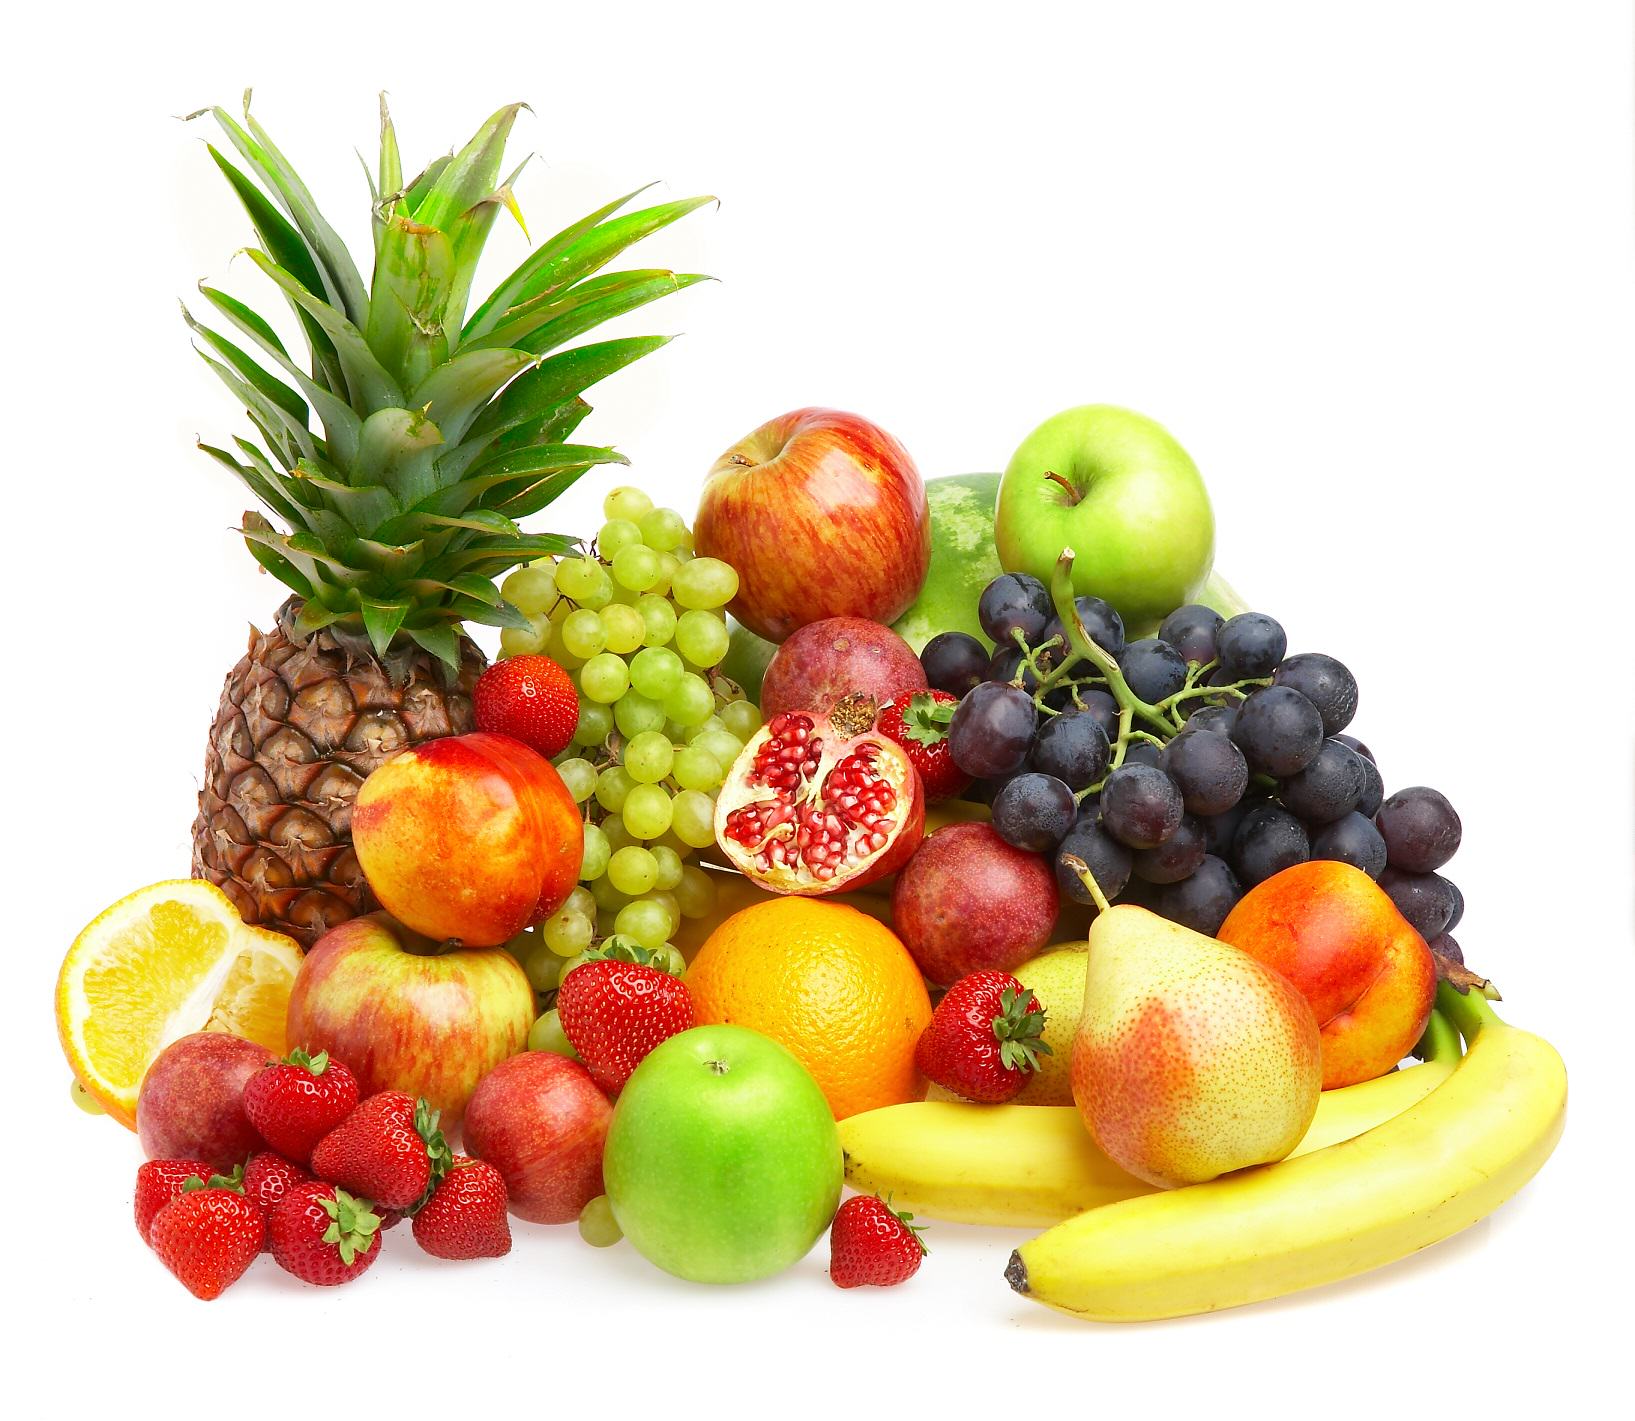 Fruites aporten antioxidants